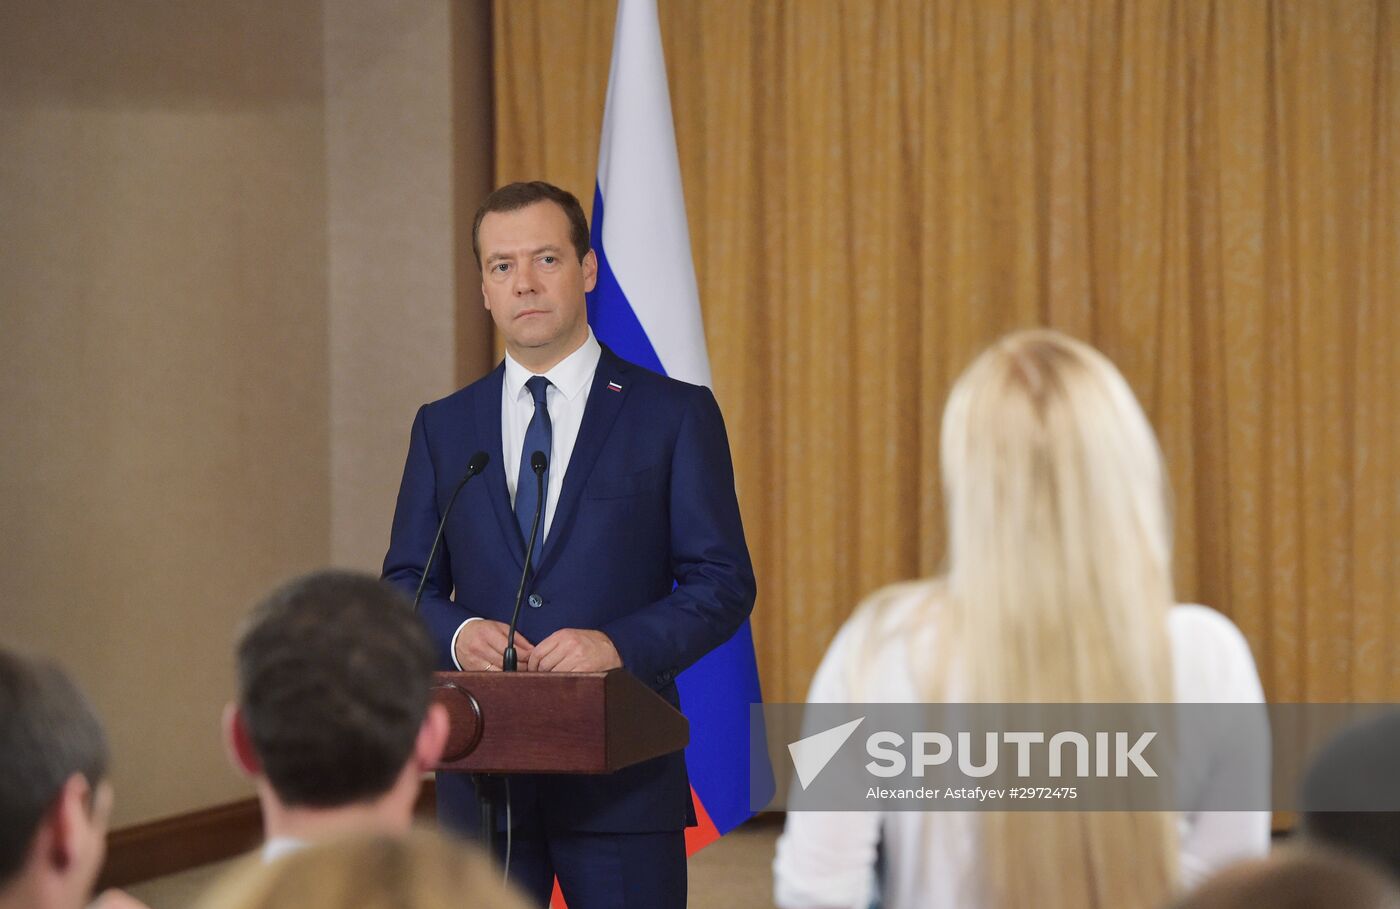 Prime Minister Dmitry Medvedev's official visit to Palestine